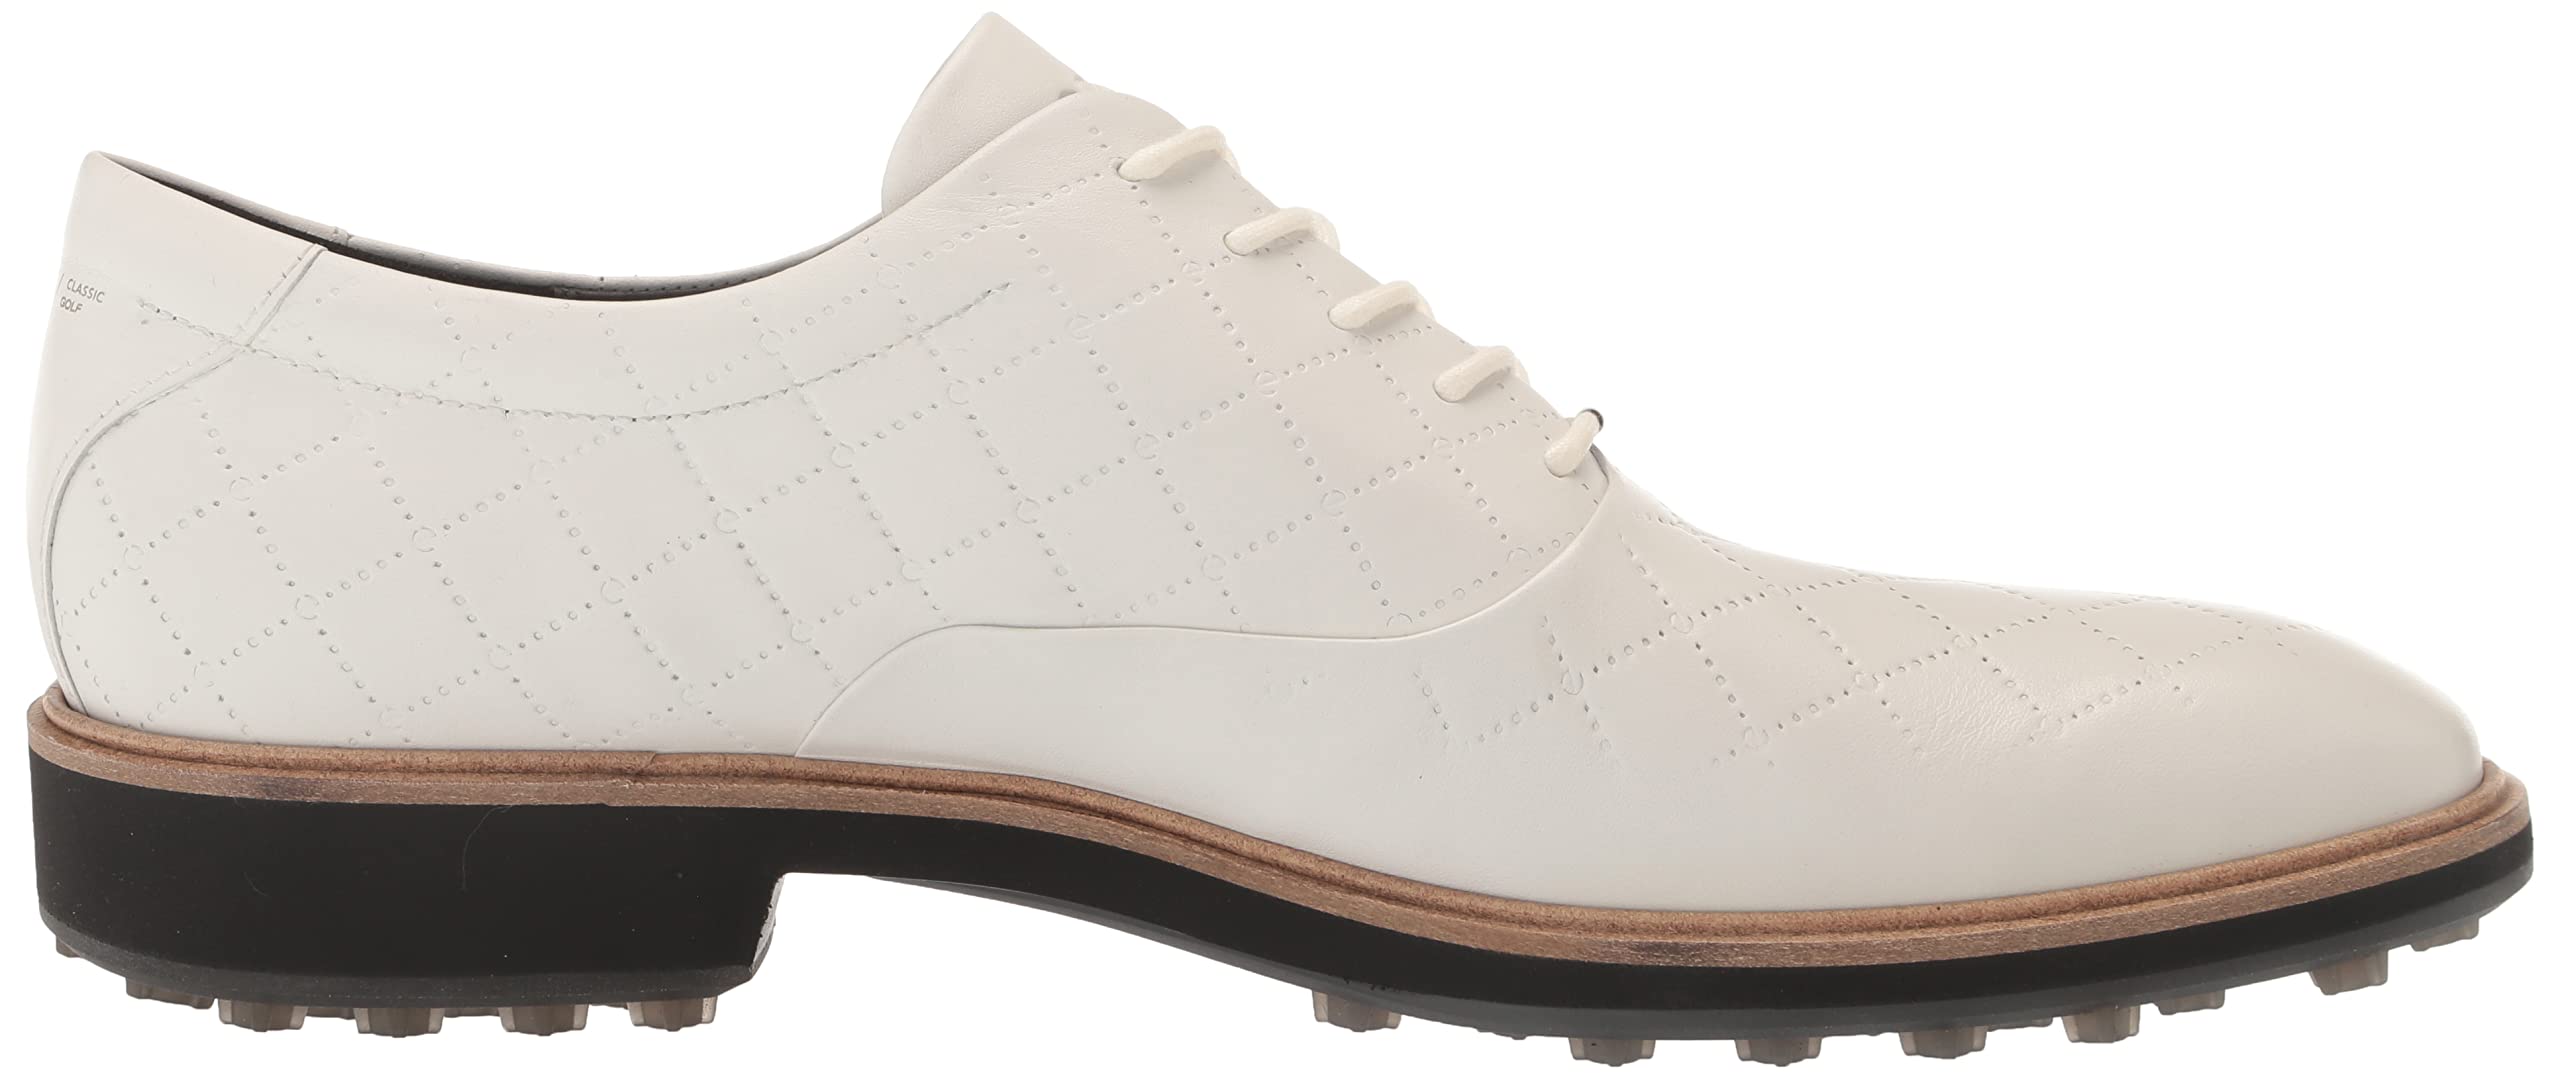 ECCO Men's Classic Hybrid Hydromax Waterproof Golf Shoe